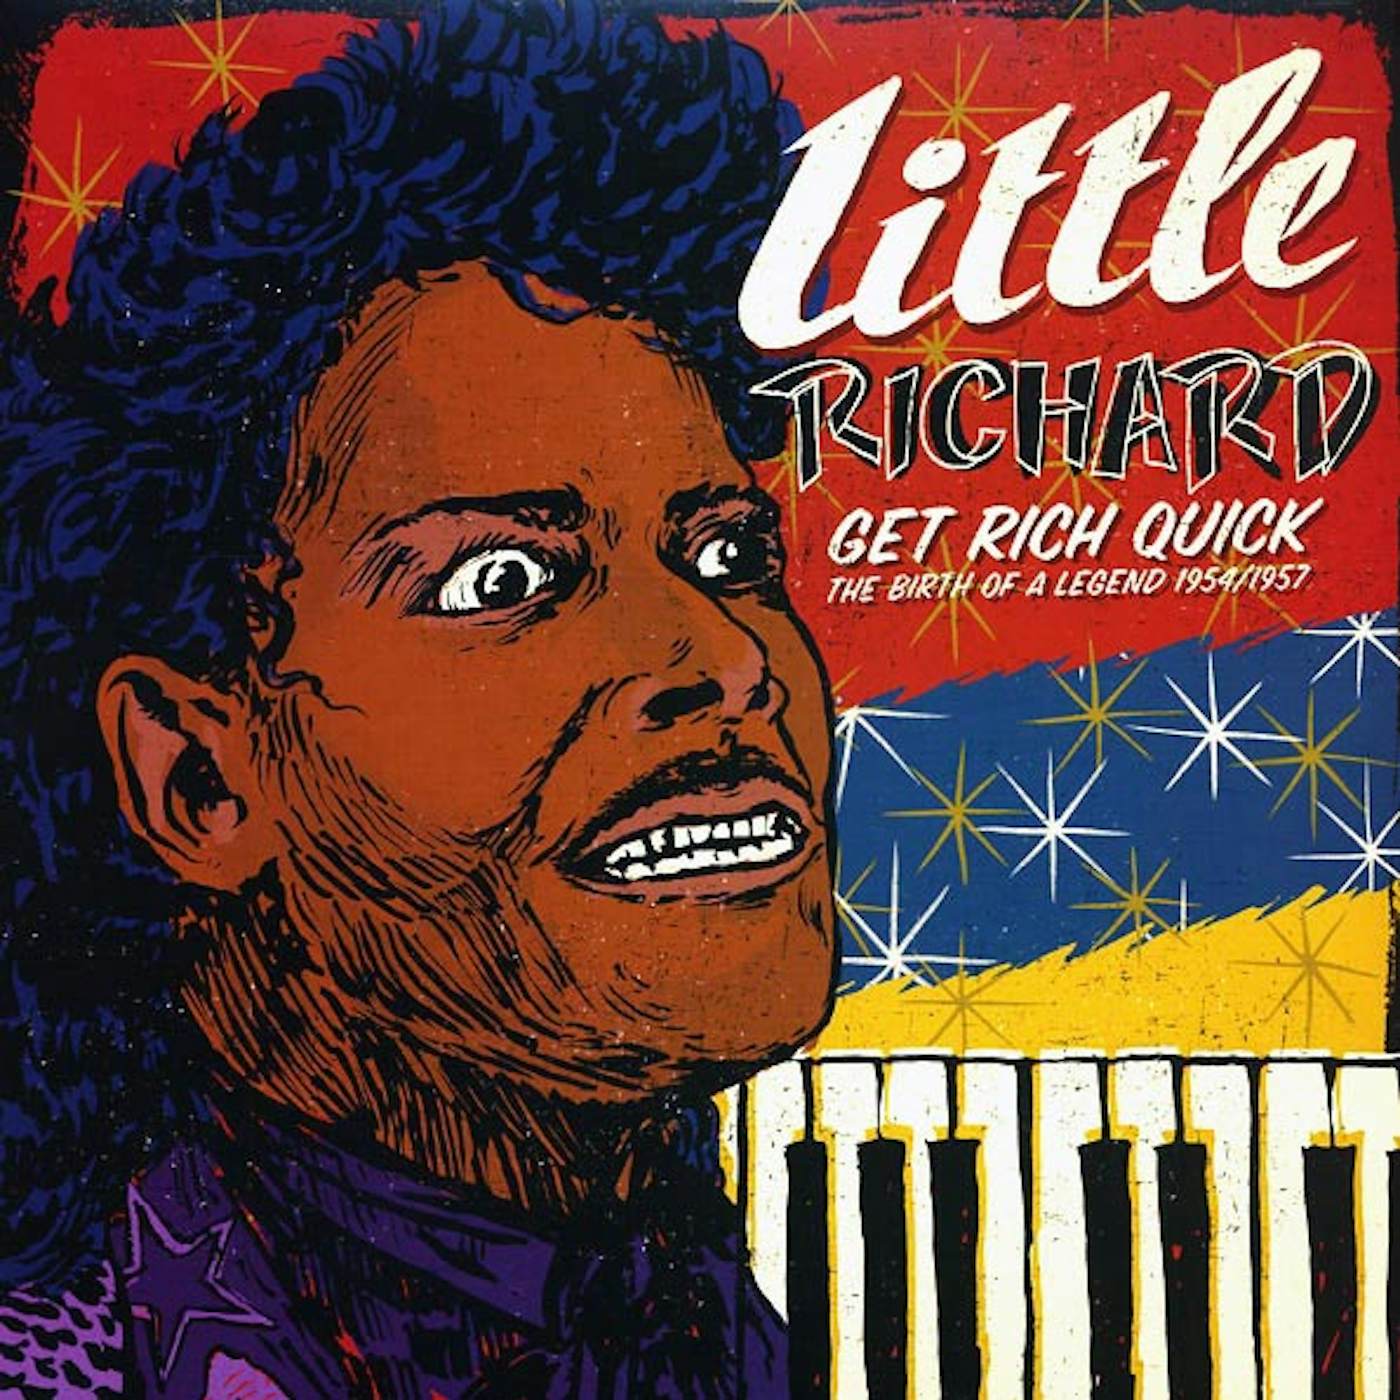 Little Richard  LP -  Get Rich Quick: The Birth Of A Legend 19541957 (Vinyl)